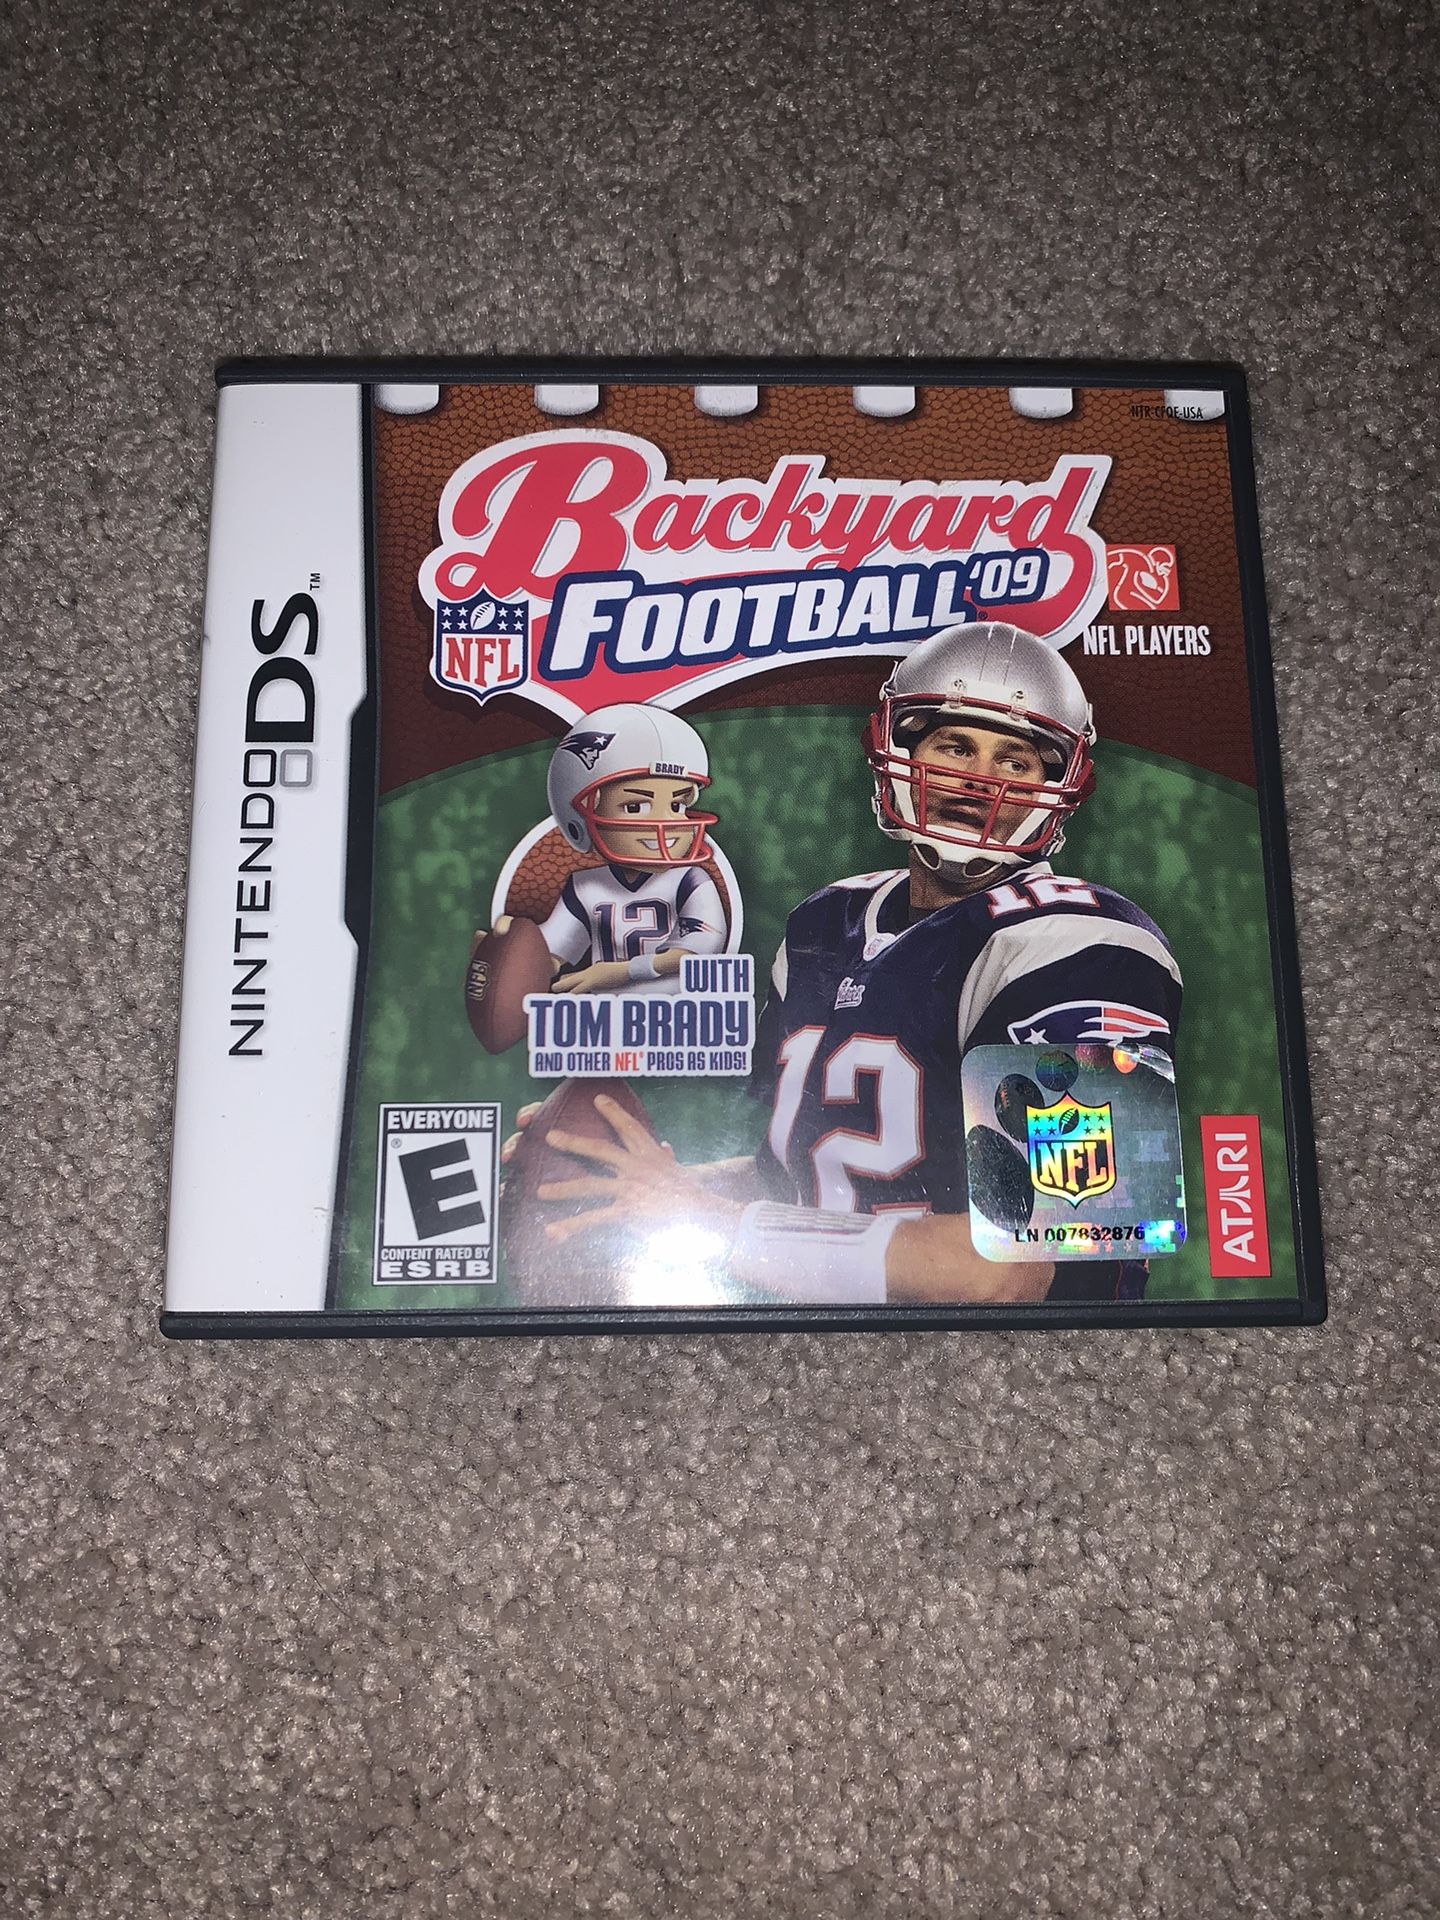 Nintendo DS Backyard Football ‘09